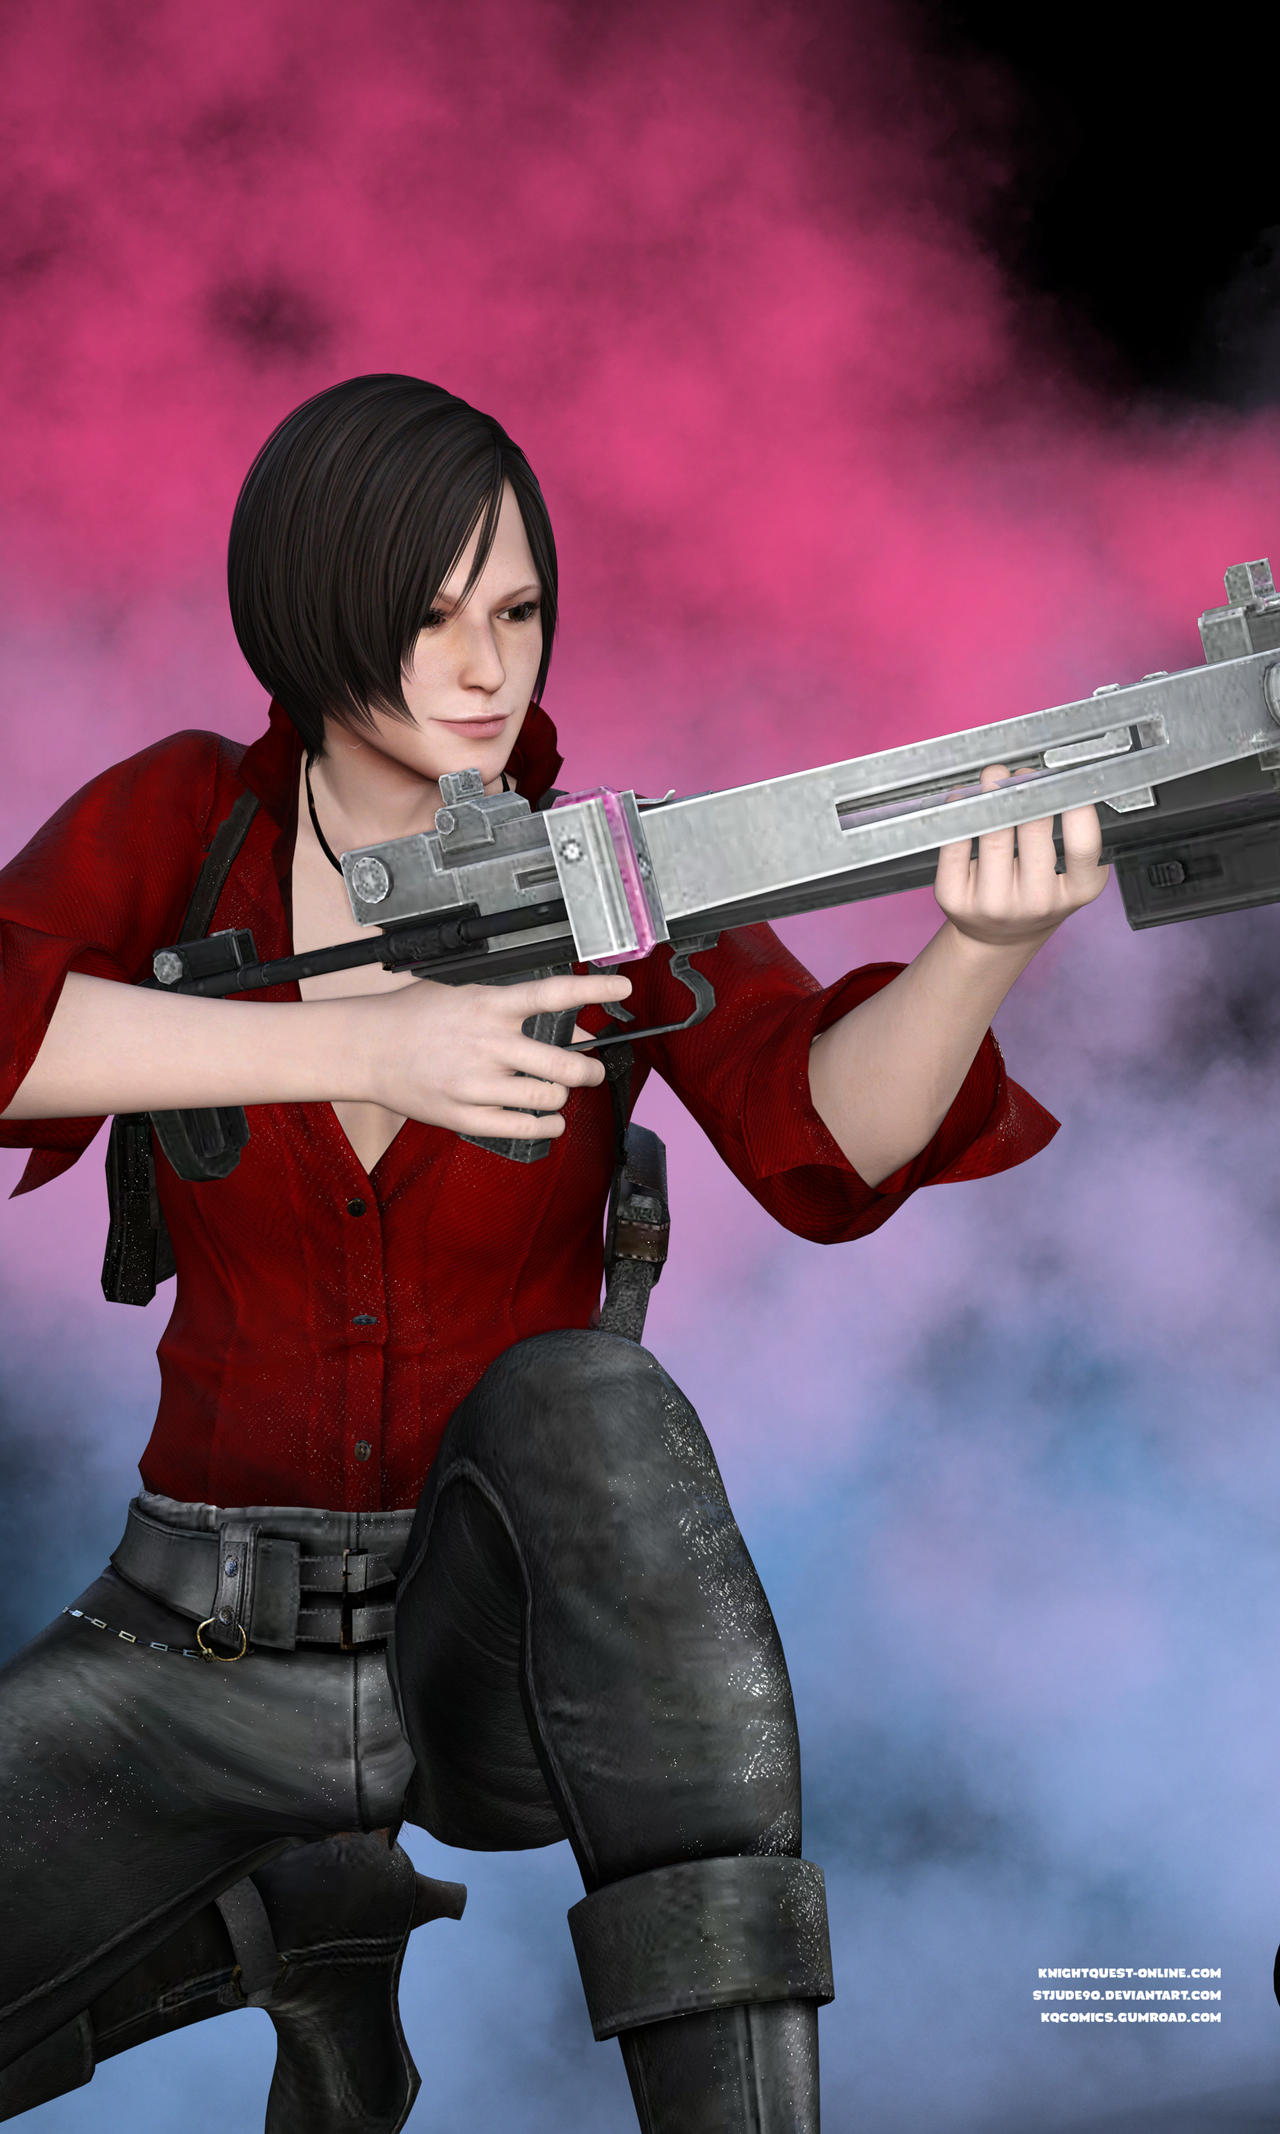 Ada Wong Resident Evil 4 Remake by EzioMaverick on DeviantArt